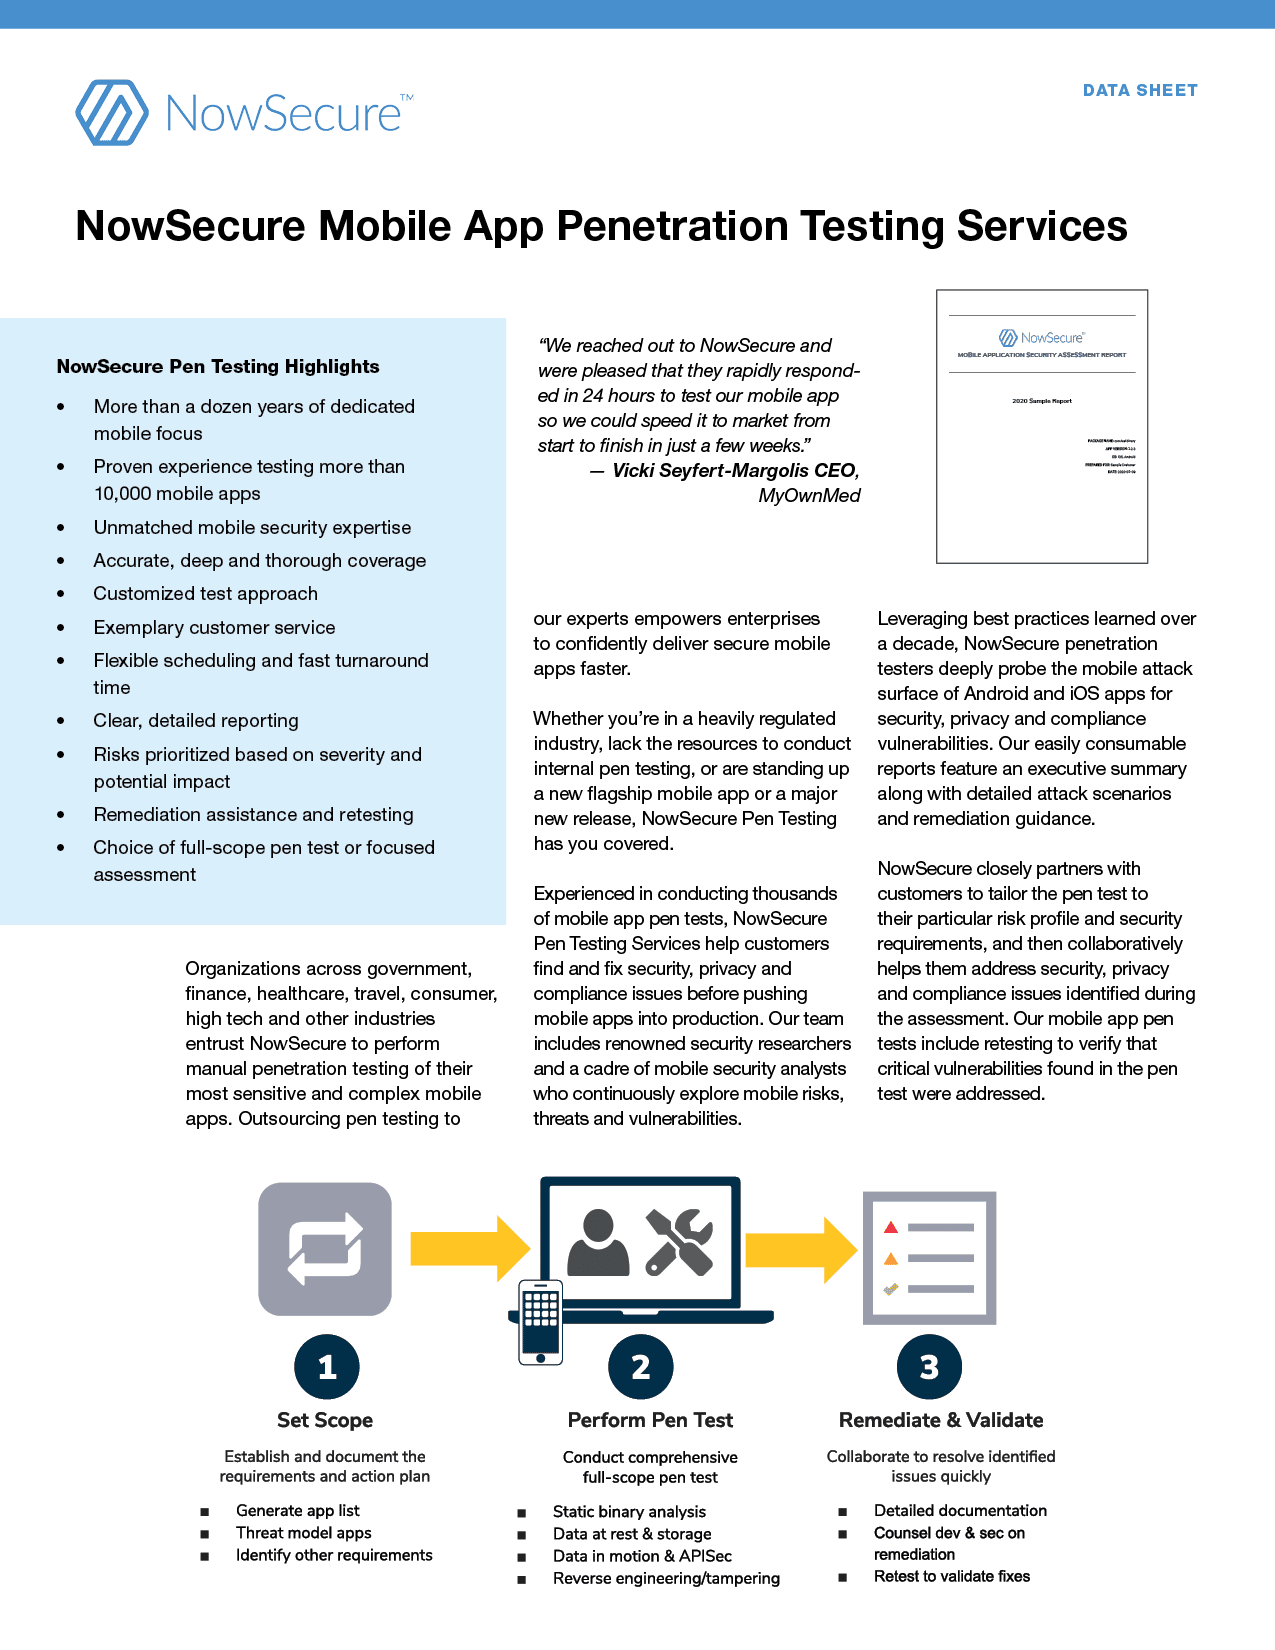 NowSecure Mobile App Penetration Testing Services